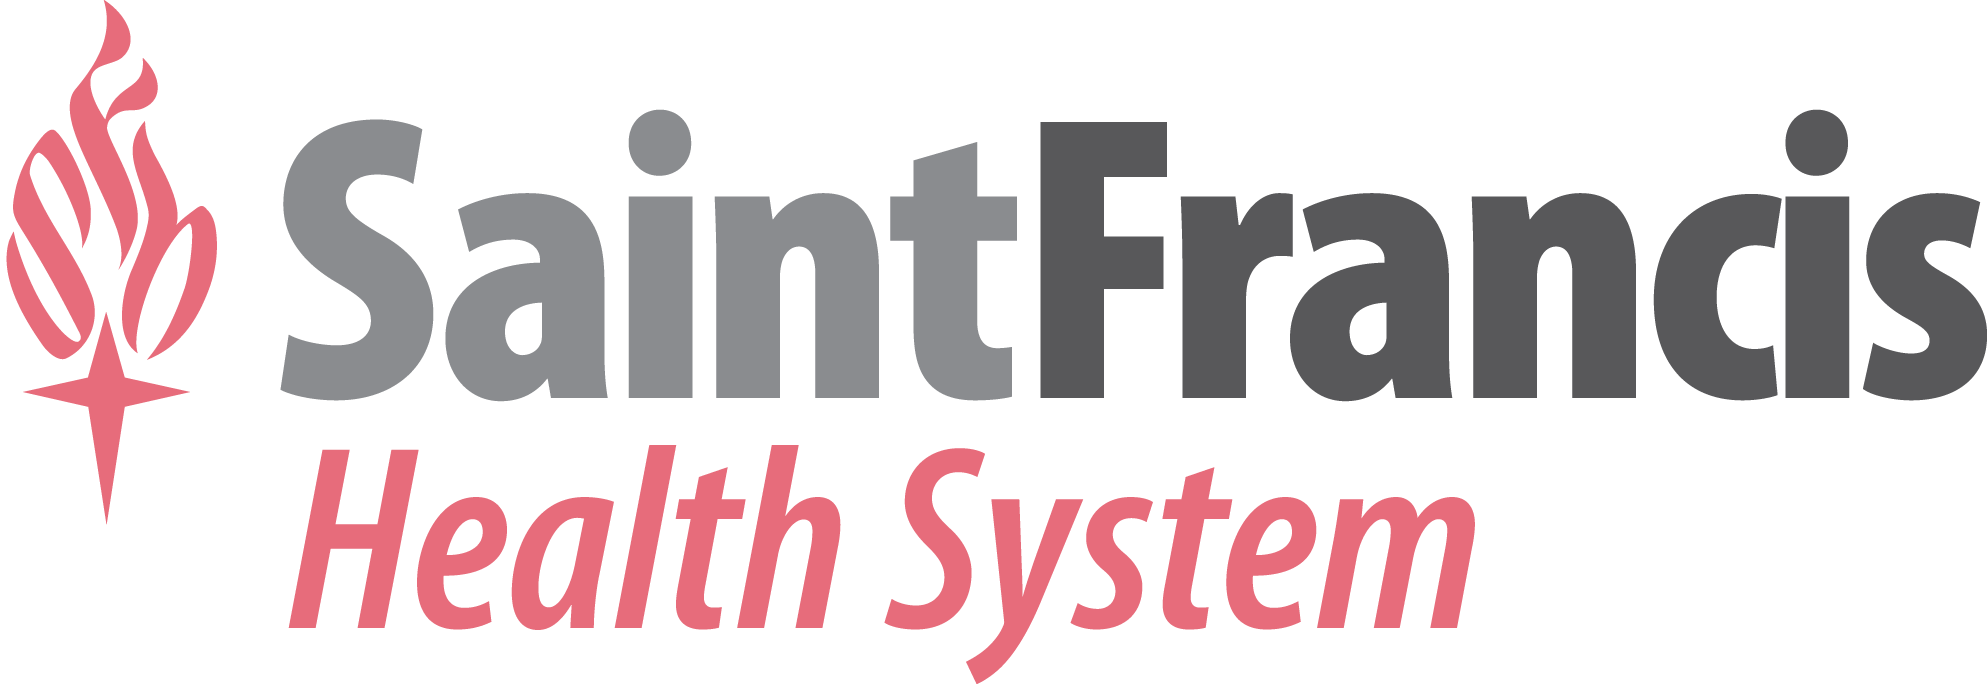 St. Francis Health System logo - Signature Sponsor